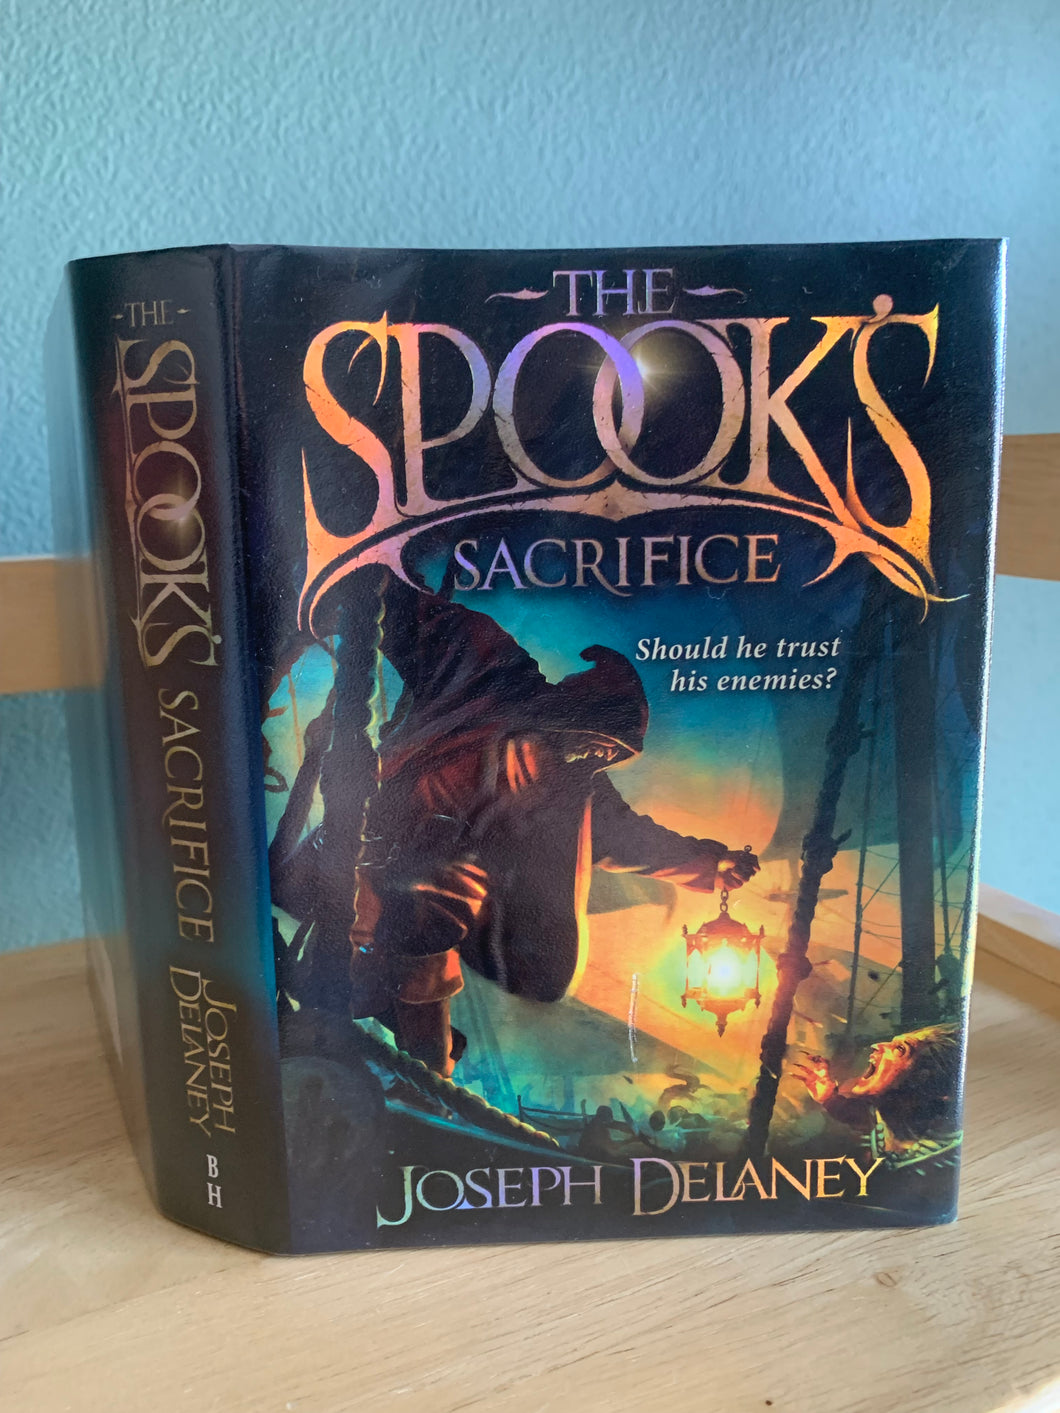 The Spooks Sacrifice (signed)